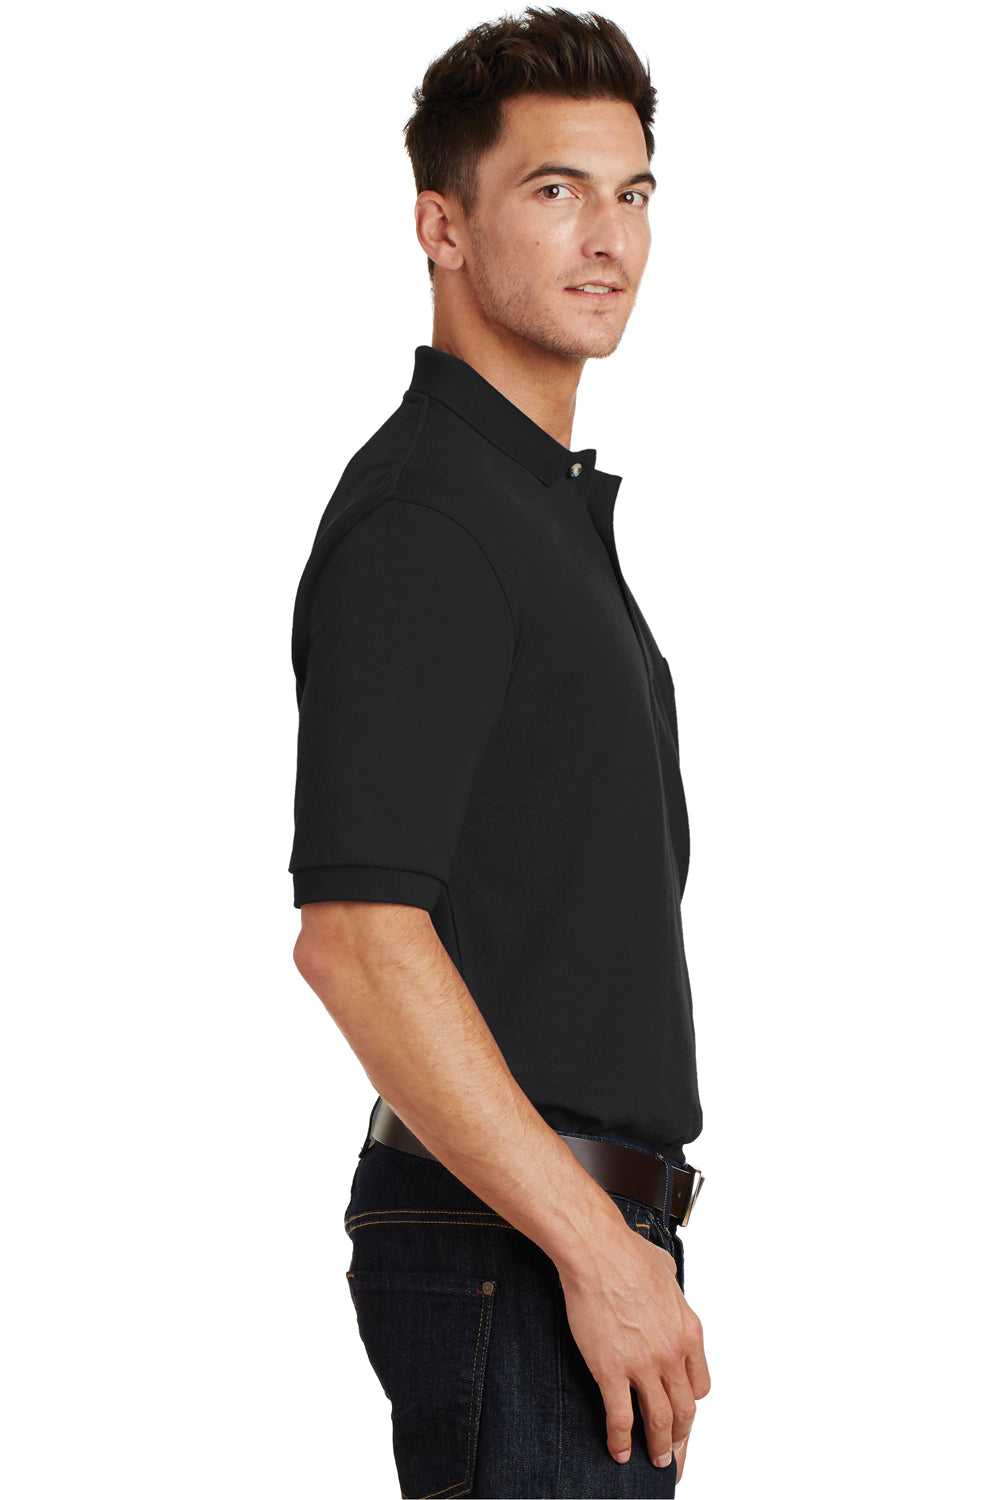 Port Authority K420P Mens Short Sleeve Polo Shirt w/ Pocket Black Side